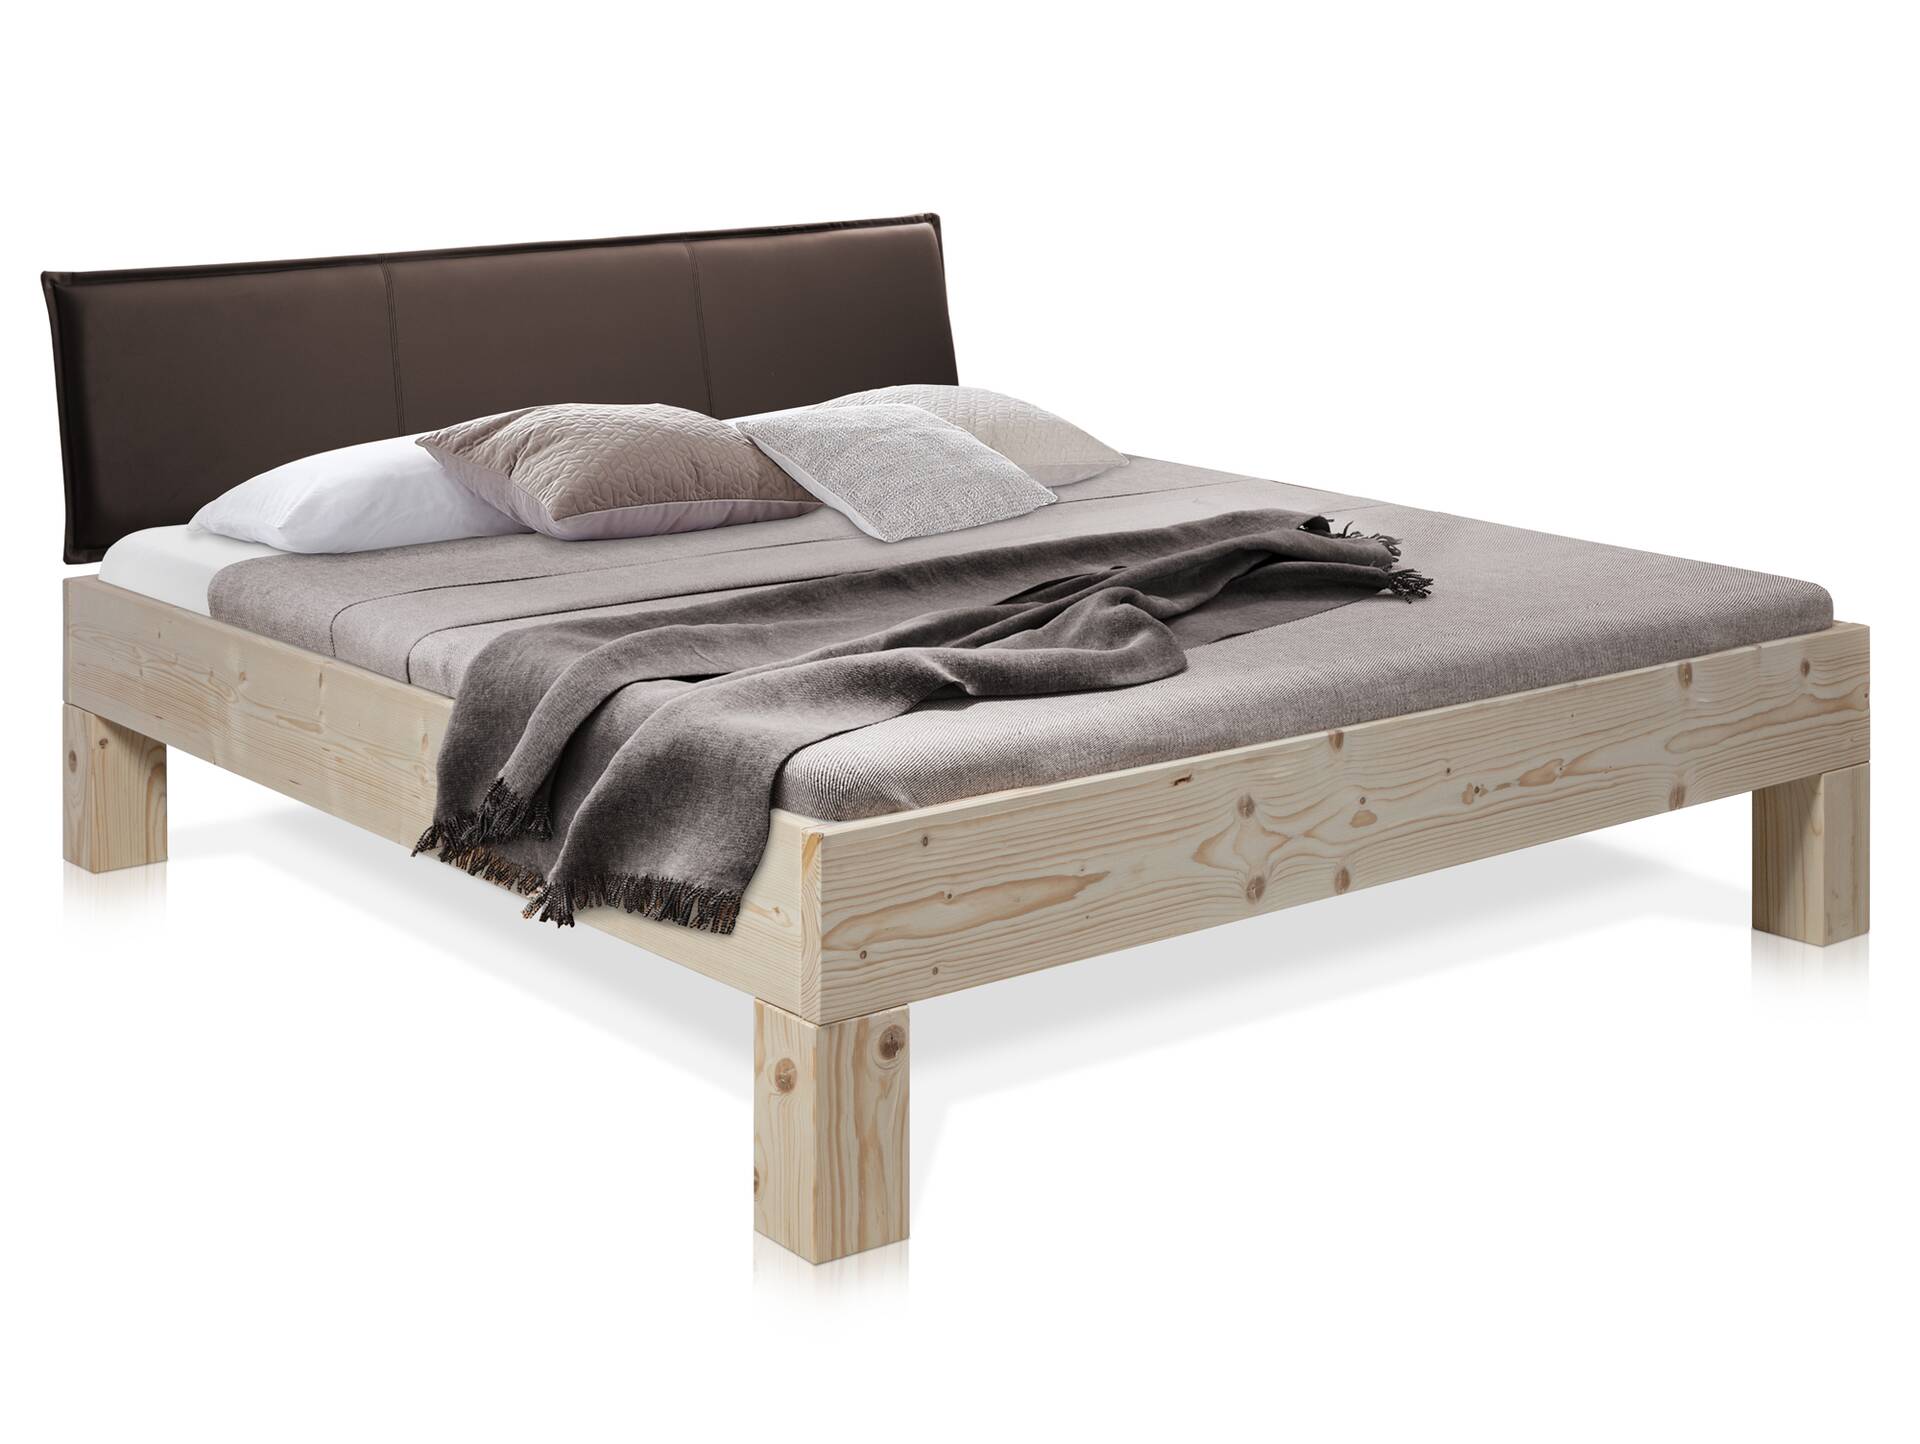 LUKY 4-Fuß-Bett mit Polster-Kopfteil, Material Massivholz, Fichte massiv 140 x 200 cm | natur | Kunstleder Braun